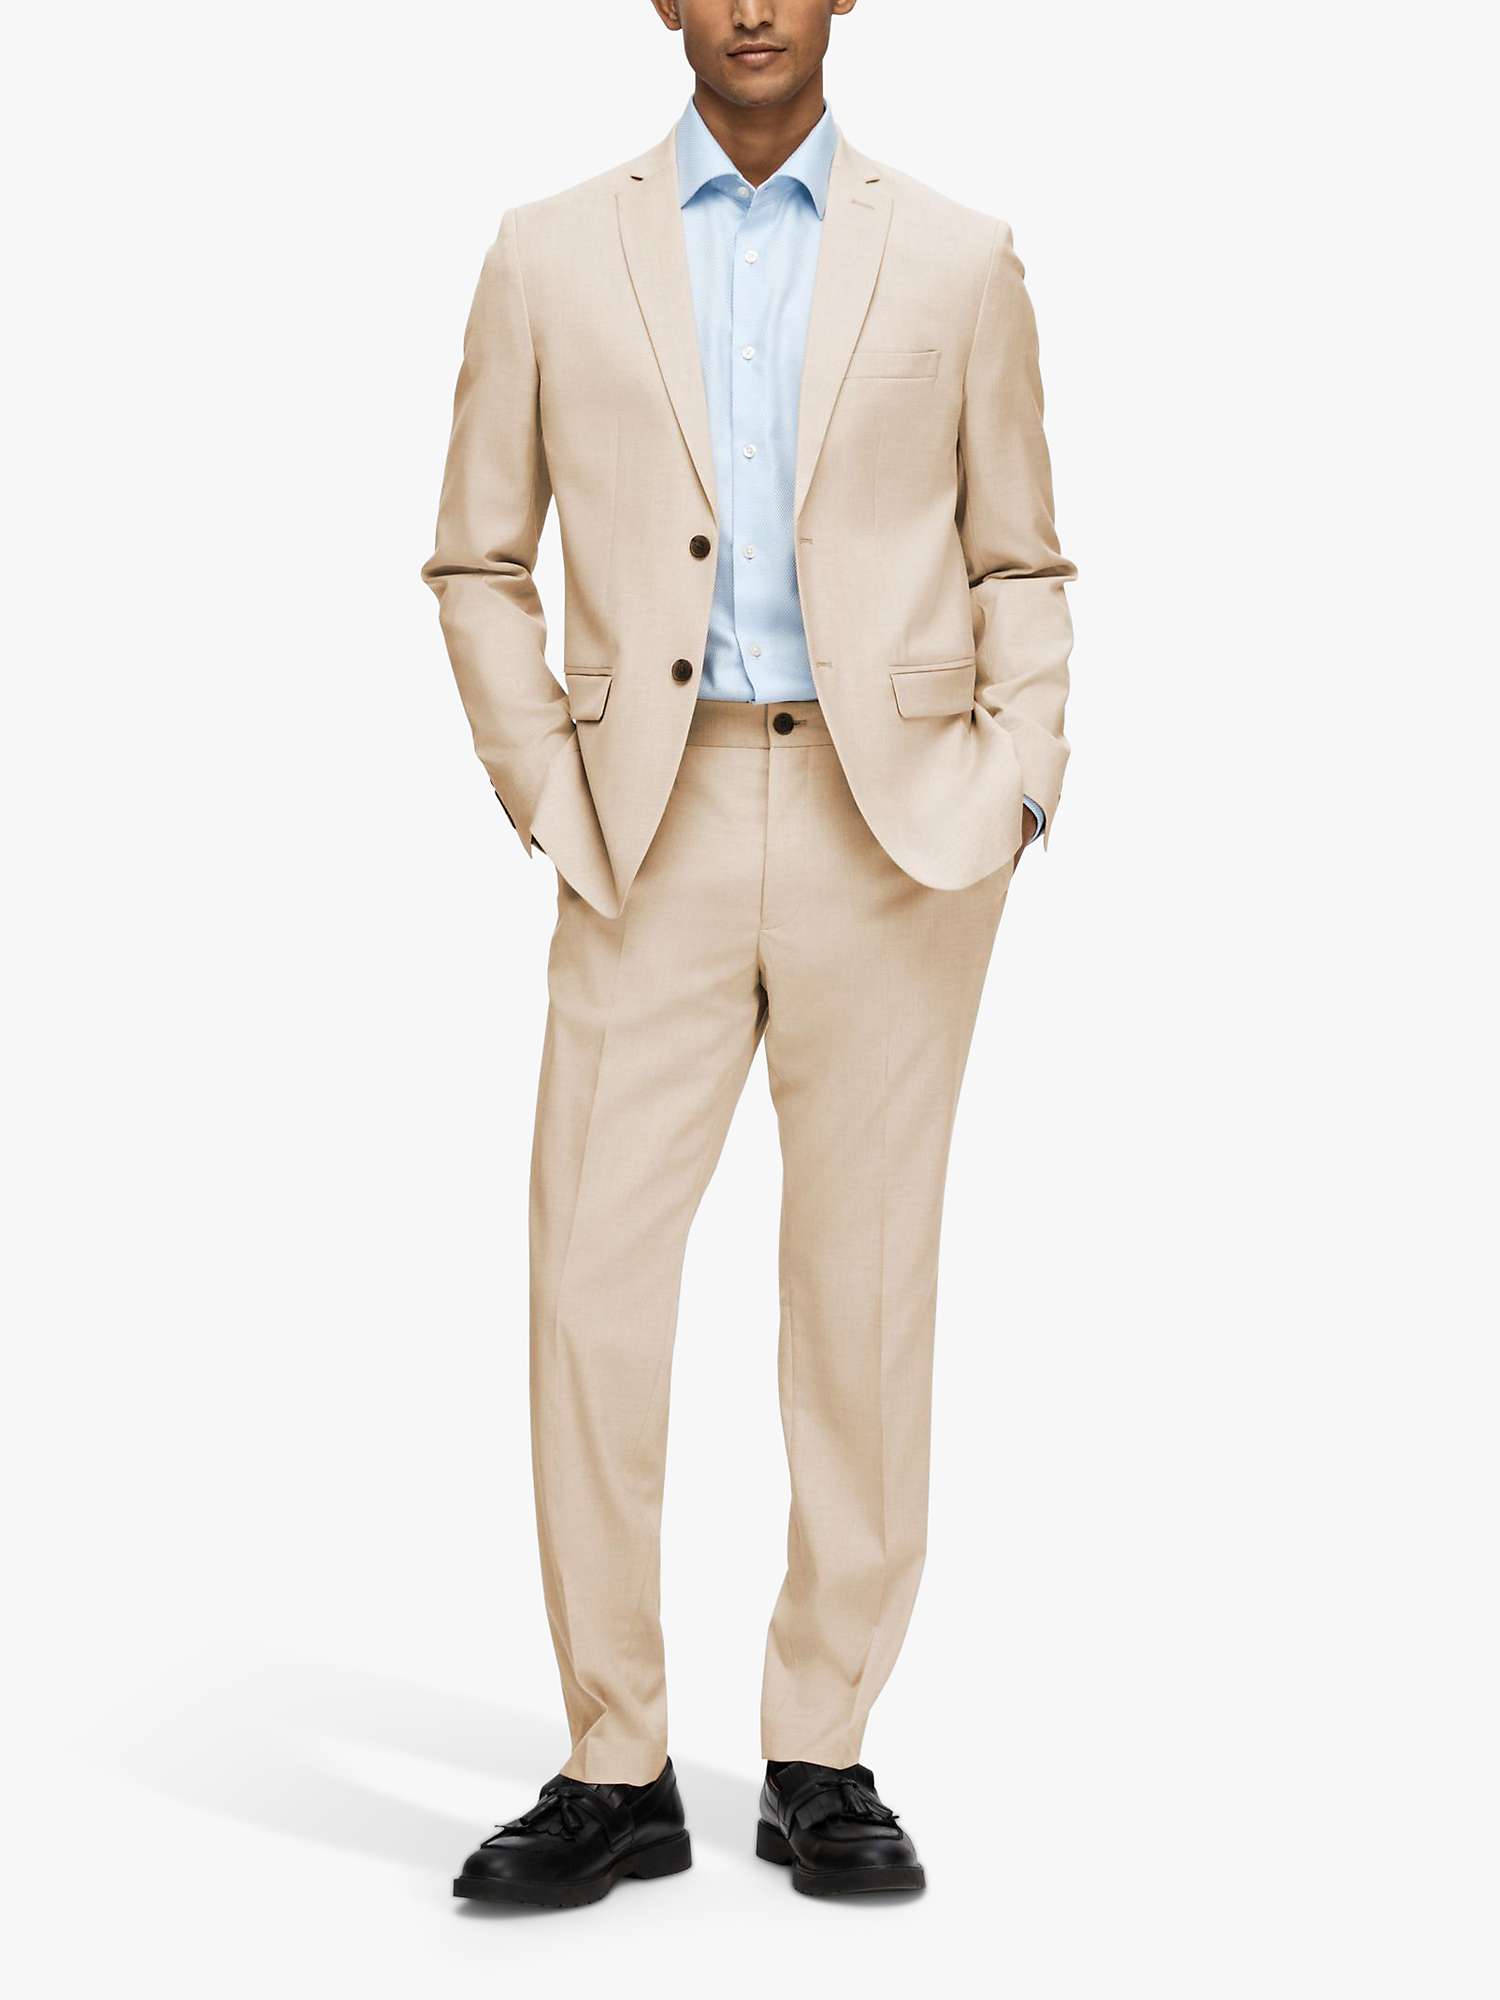 Buy SELECTED HOMME Cedric Slim Fit Suit Jacket Online at johnlewis.com